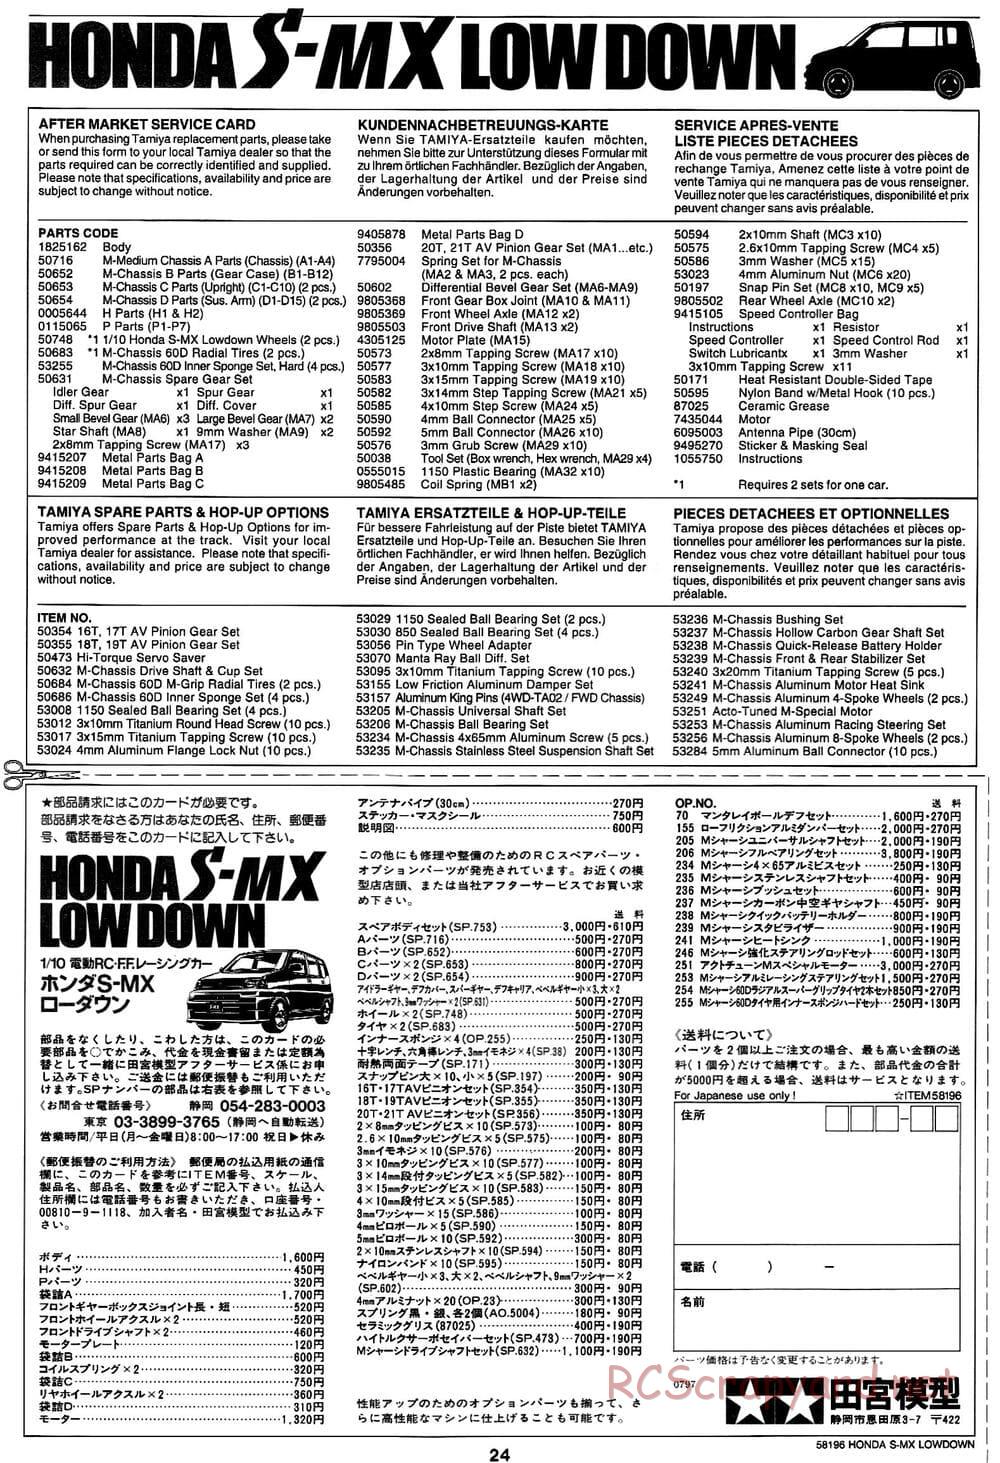 Tamiya - Honda S-MX Lowdown - M01 Chassis - Manual - Page 24